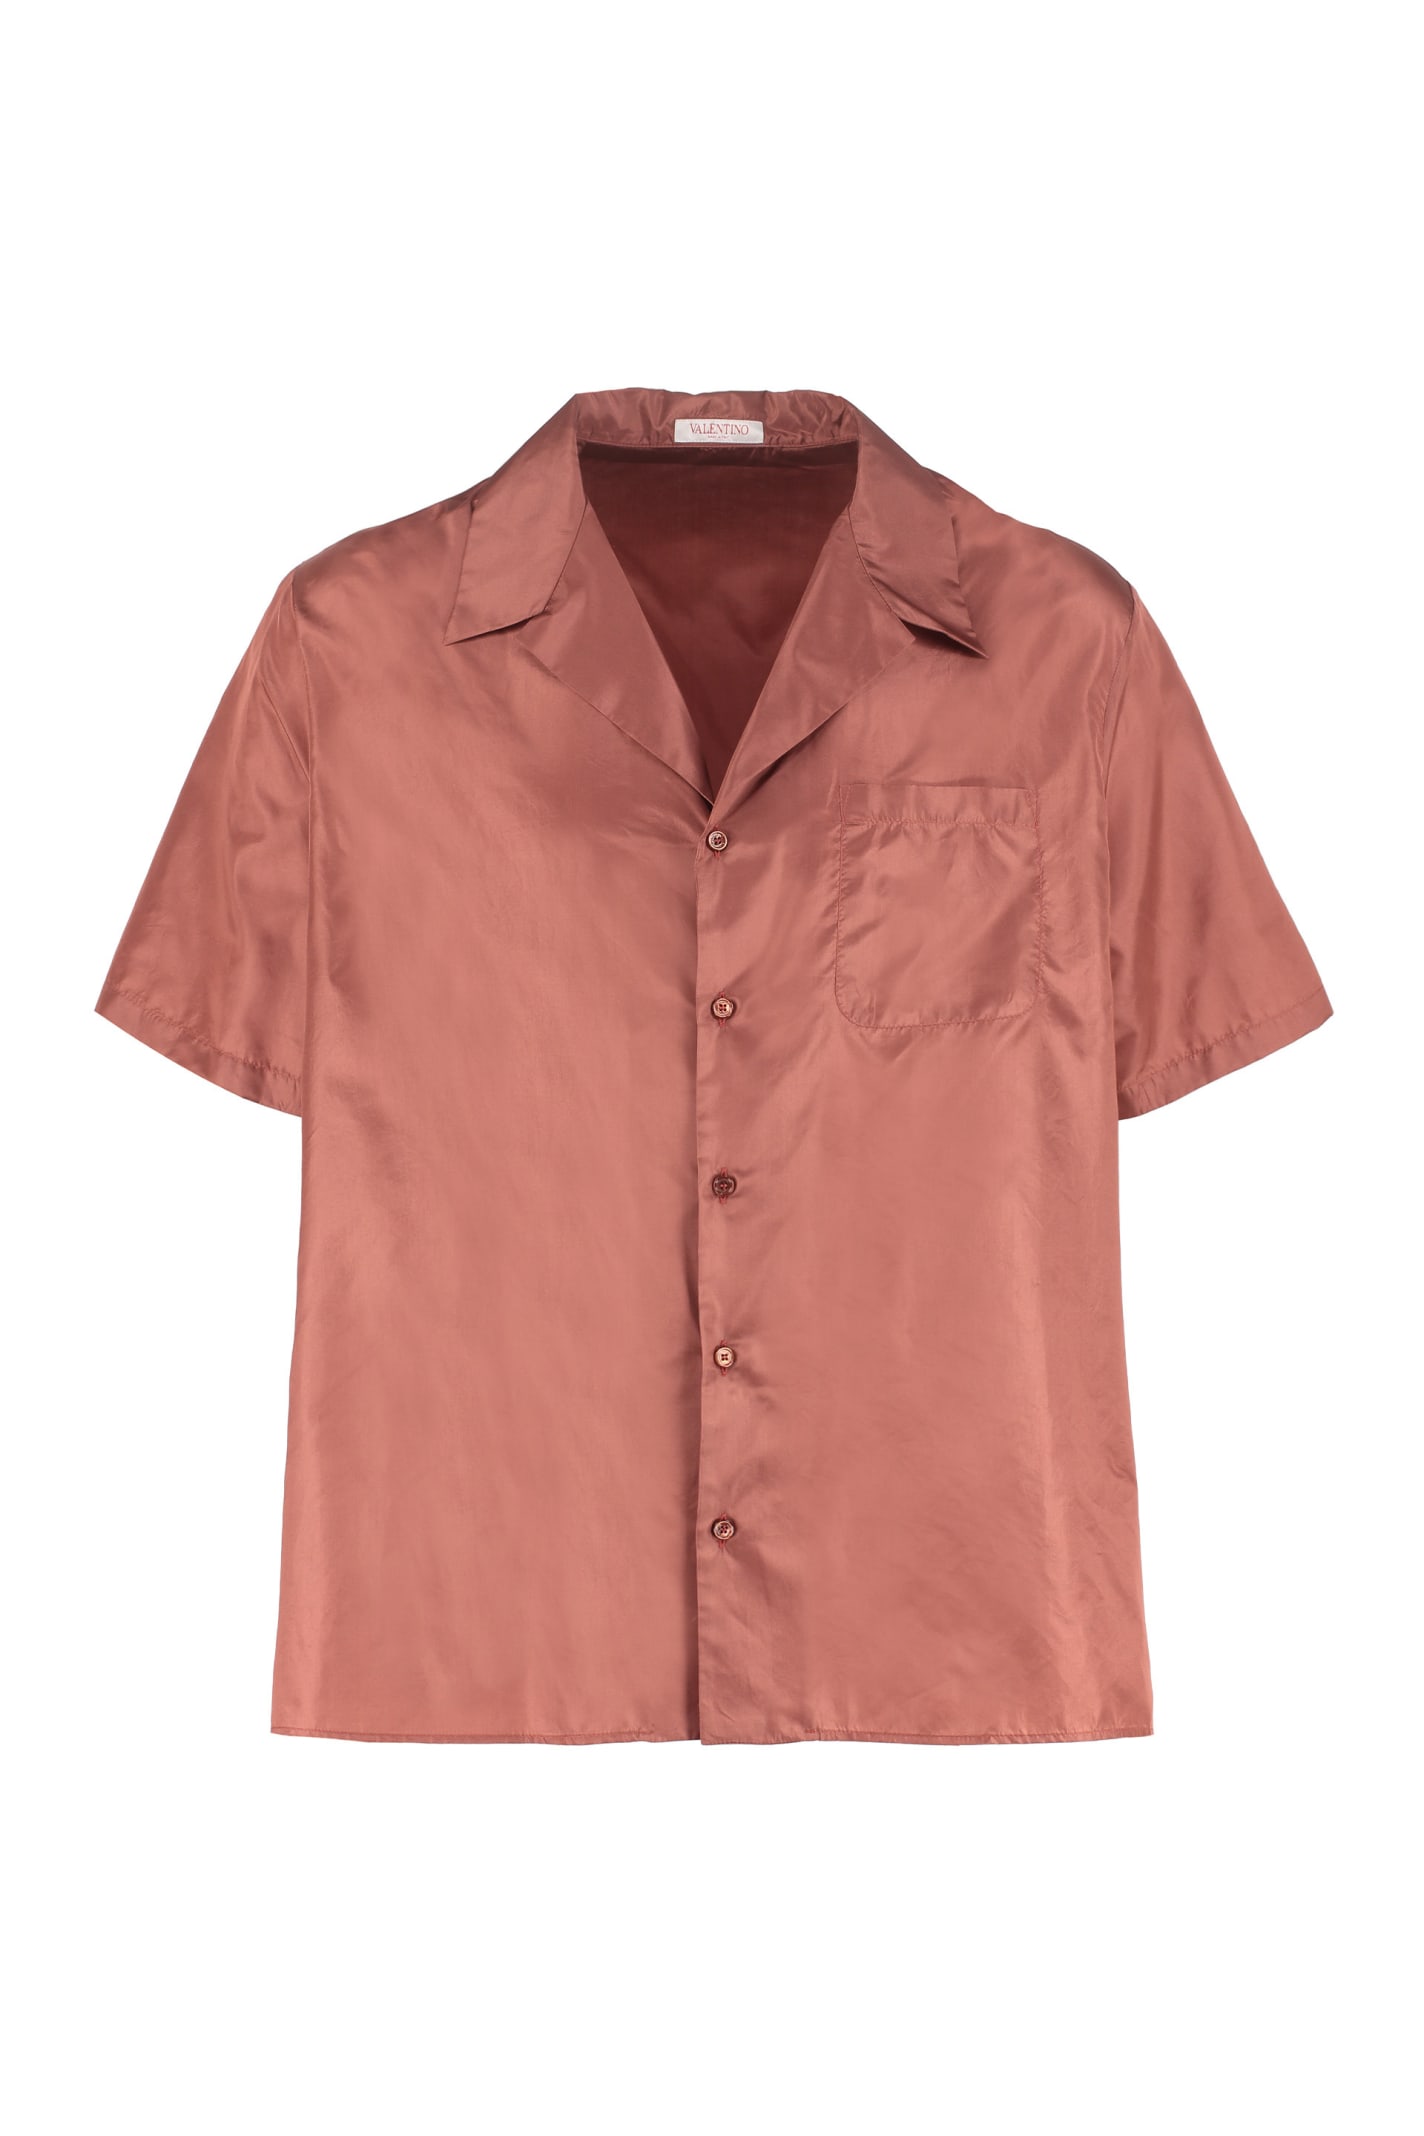 Valentino Short Sleeve Silk Shirt